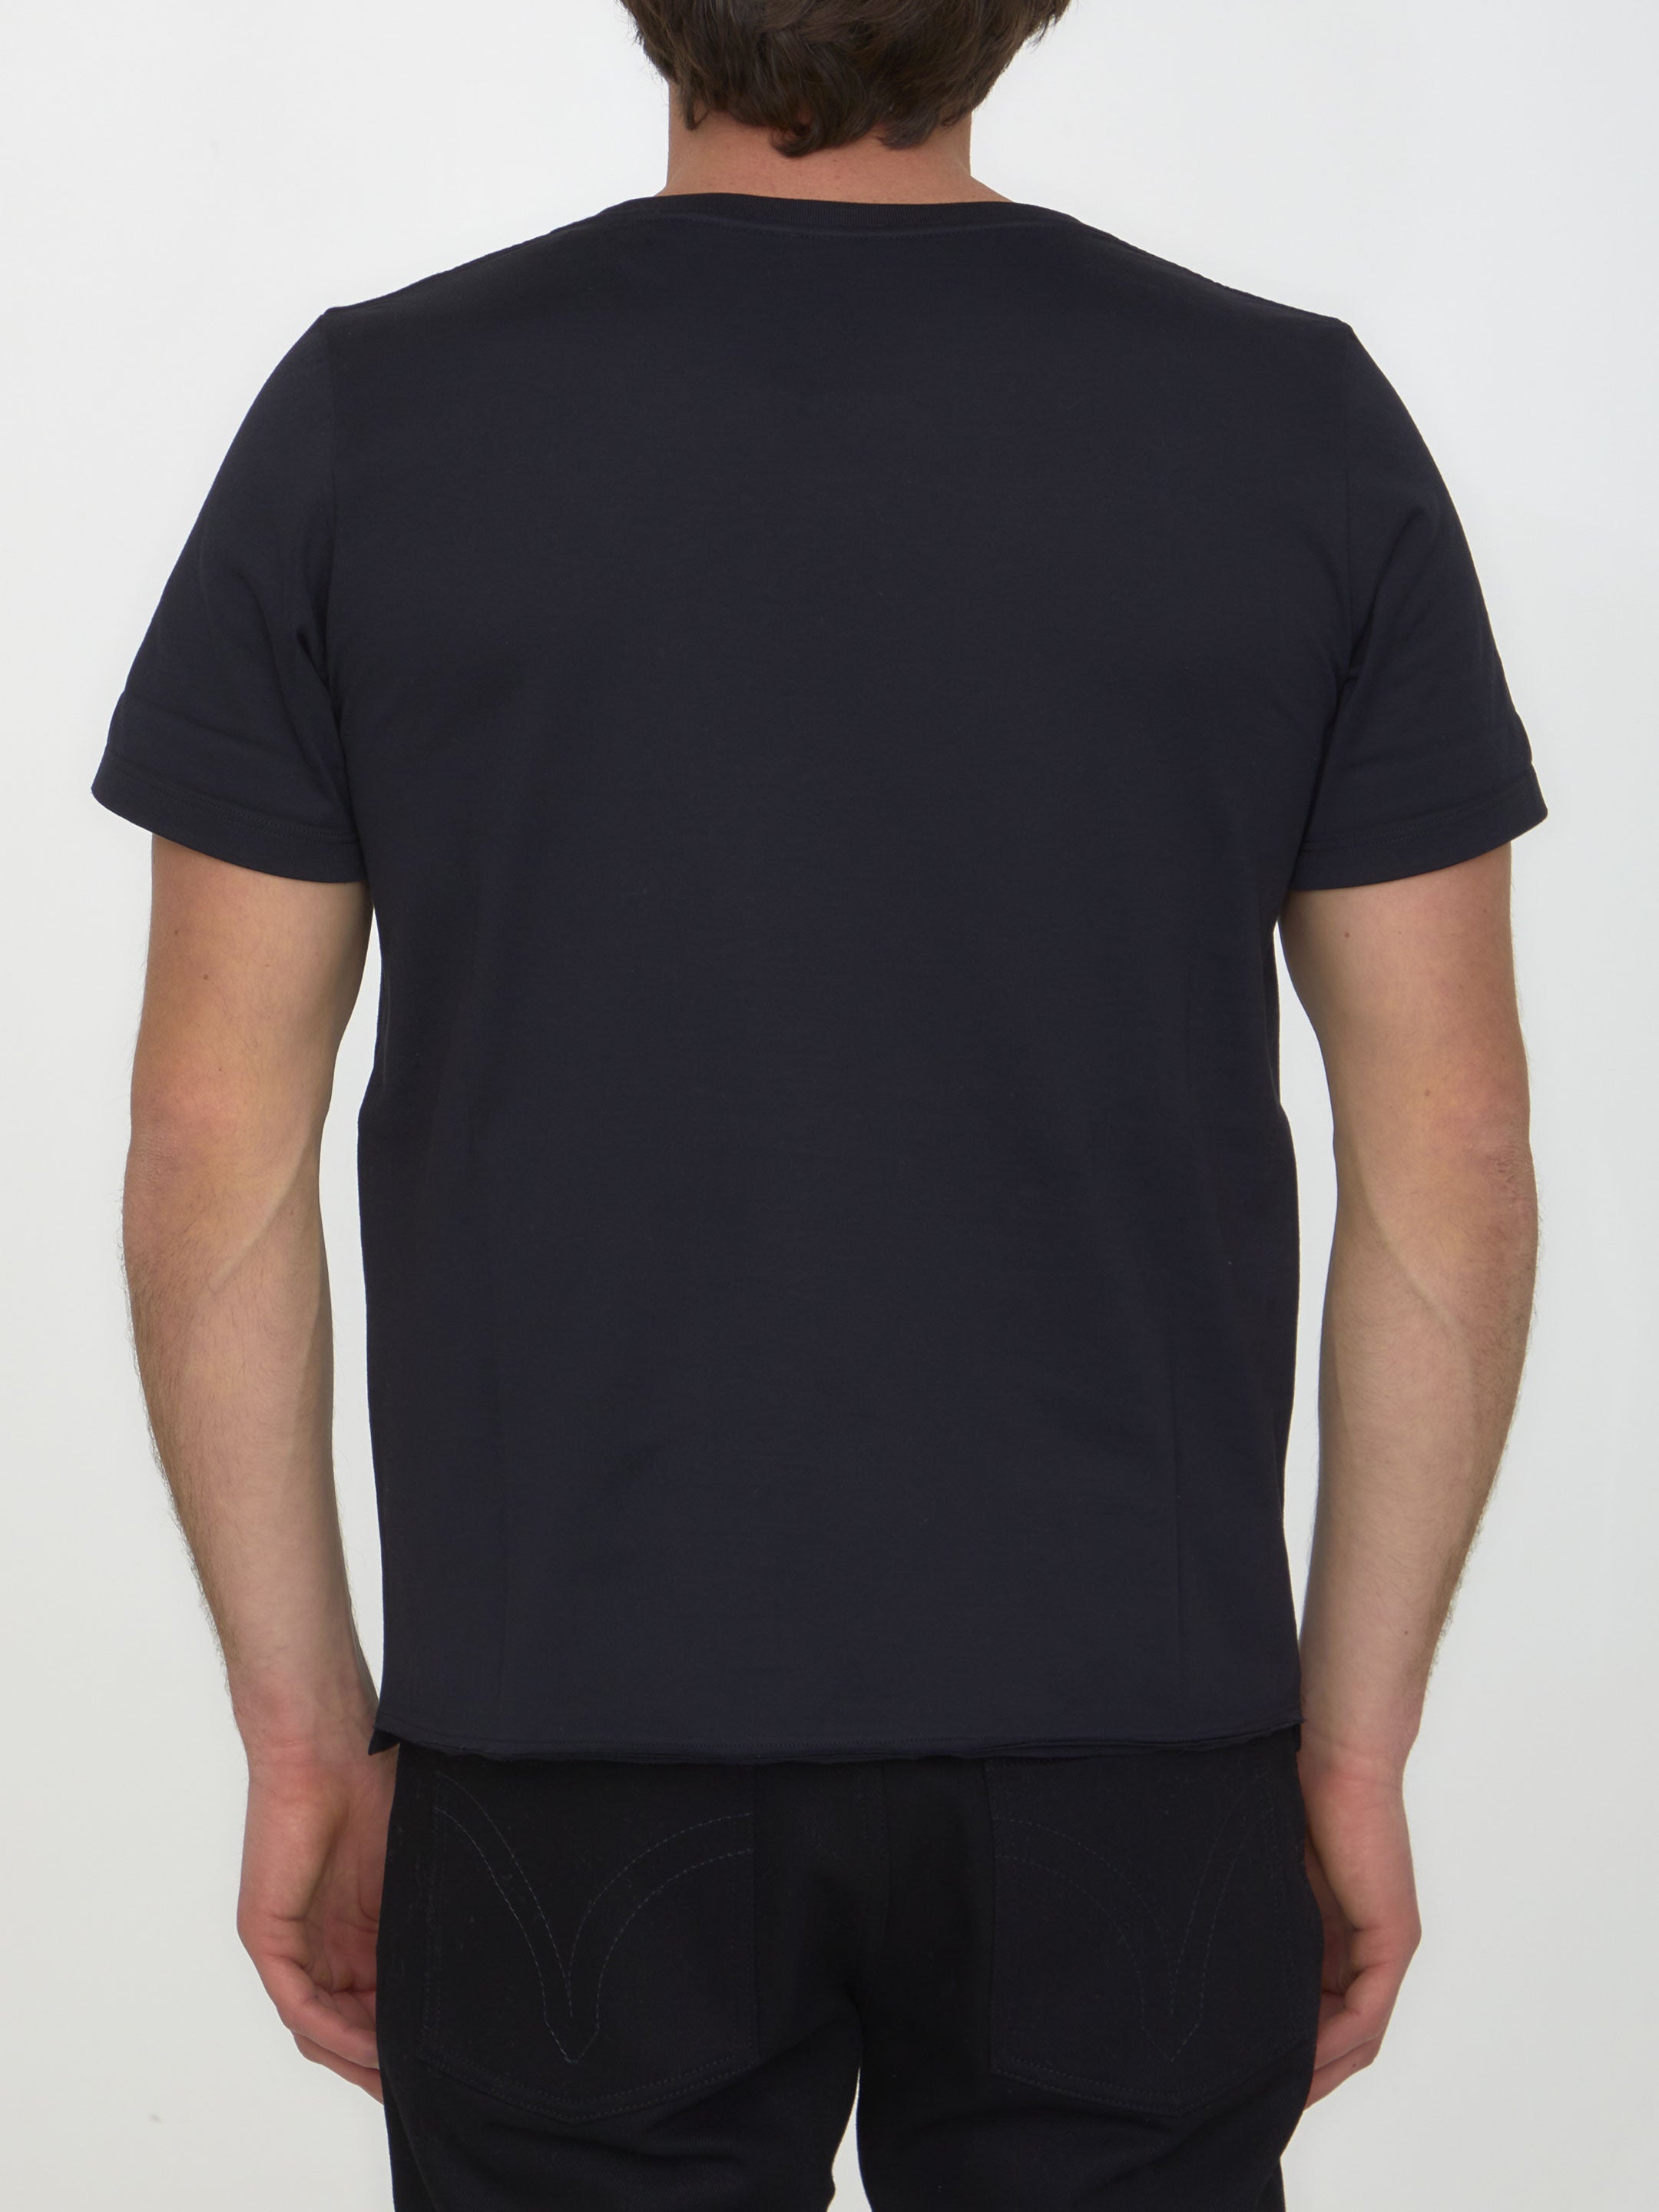 SAINT-LAURENT-OUTLET-SALE-Cotton-t-shirt-with-logo-Shirts-ARCHIVE-COLLECTION-4.jpg